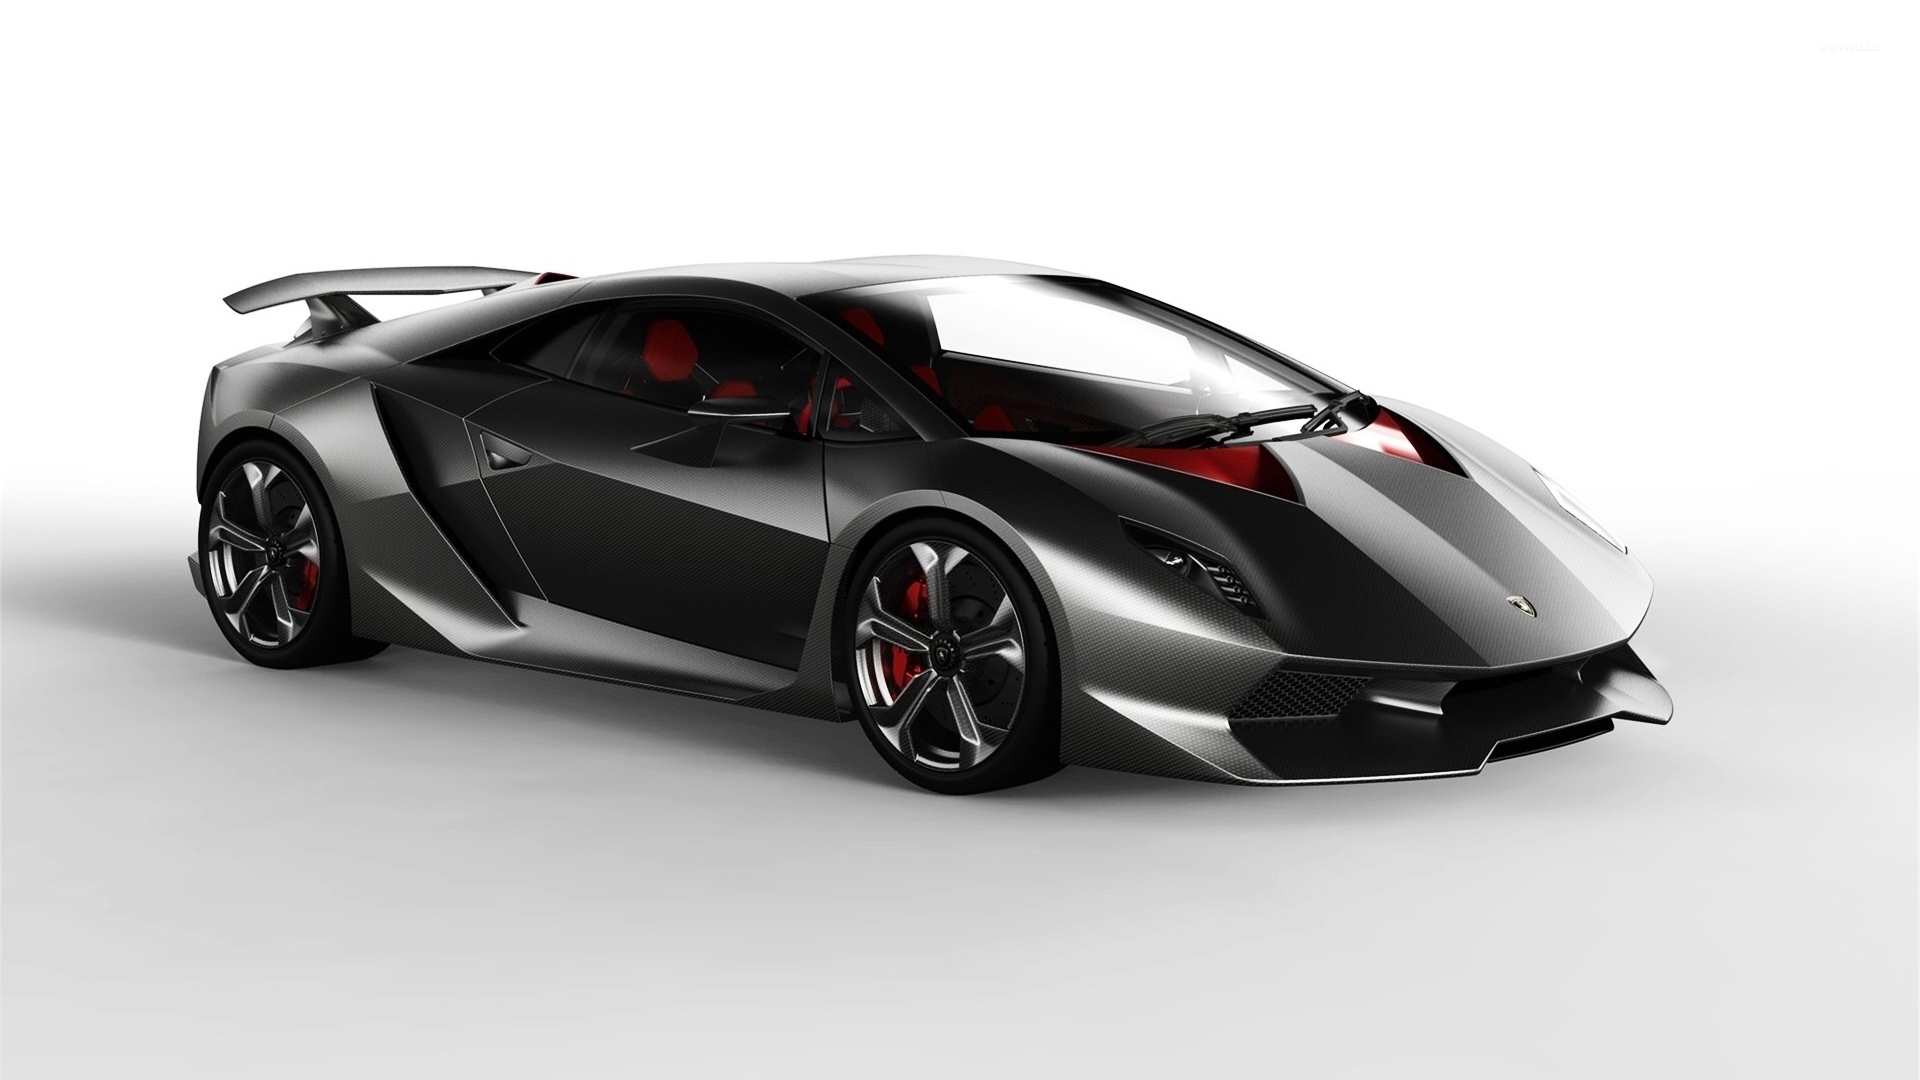 Front side view of a black Lamborghini Sesto Elemento wallpaper - Car